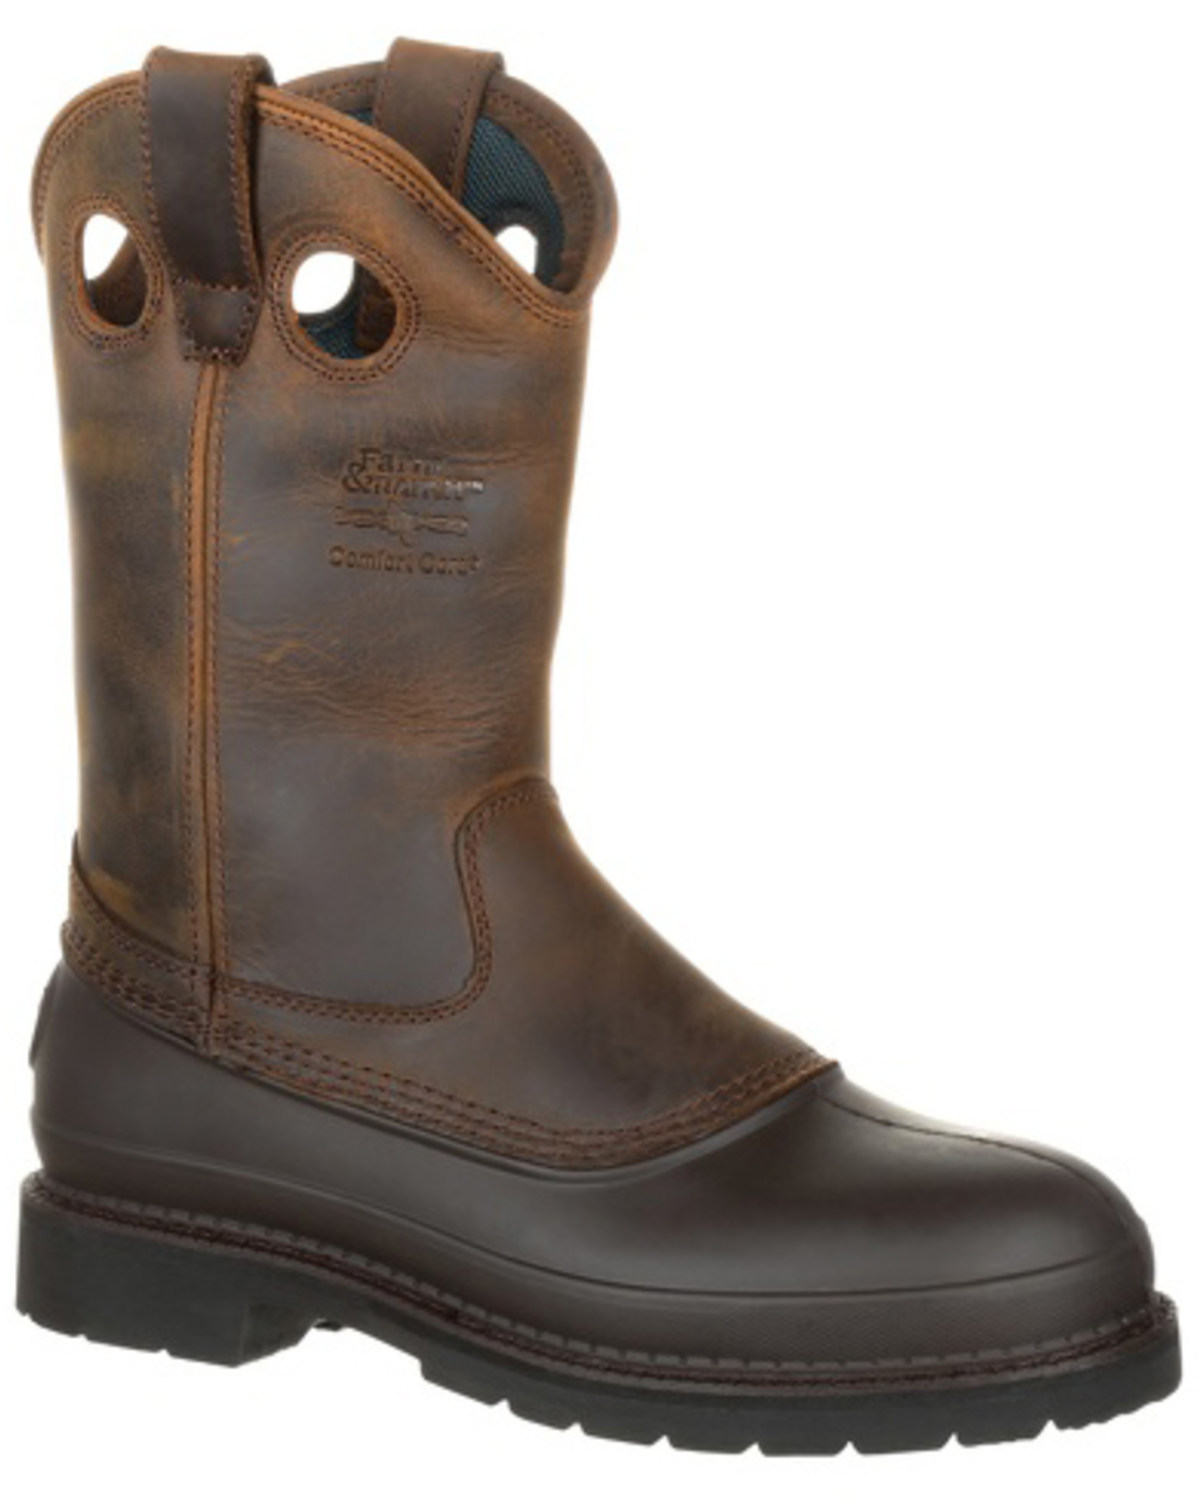 Muddog Comfort Core Work Boots | Boot Barn